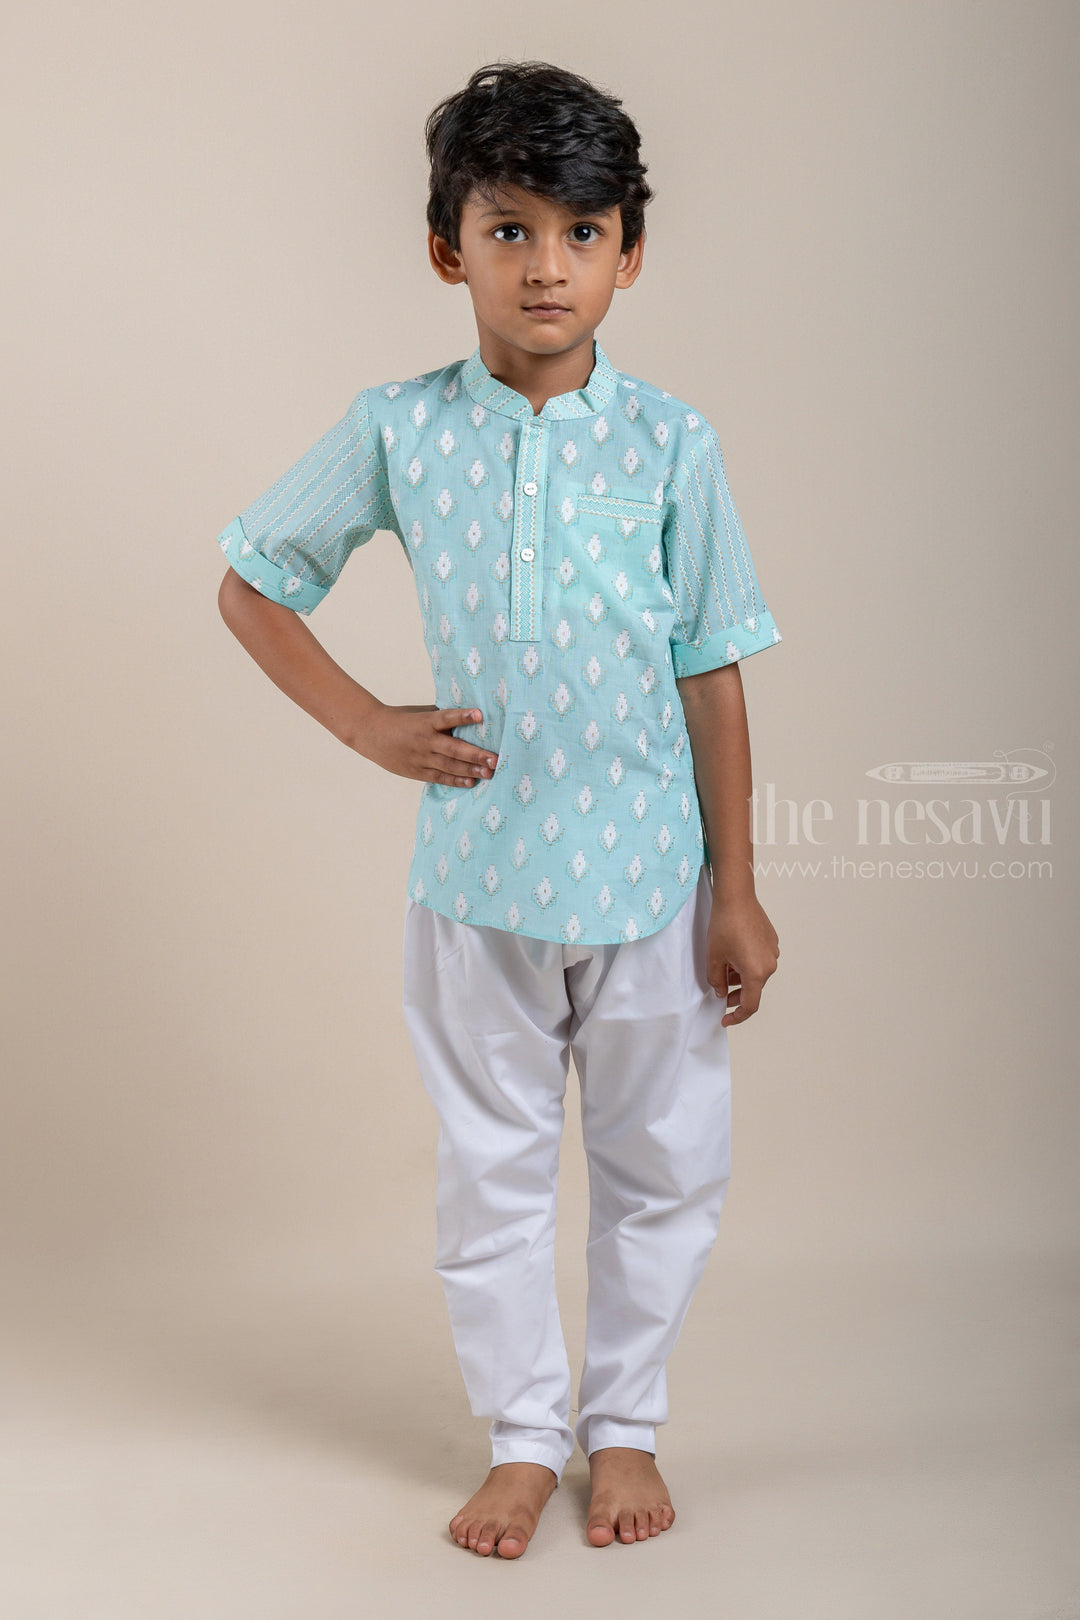 The Nesavu Boys Kurtha Shirt Adorable Butta Printed Turquoise Cotton Shirt For Boys Nesavu 12 (3M) / Turquoise / Cotton BS018A Latest Printed Cotton Shirts For Boys | Ethnic Shirt | The Nesavu